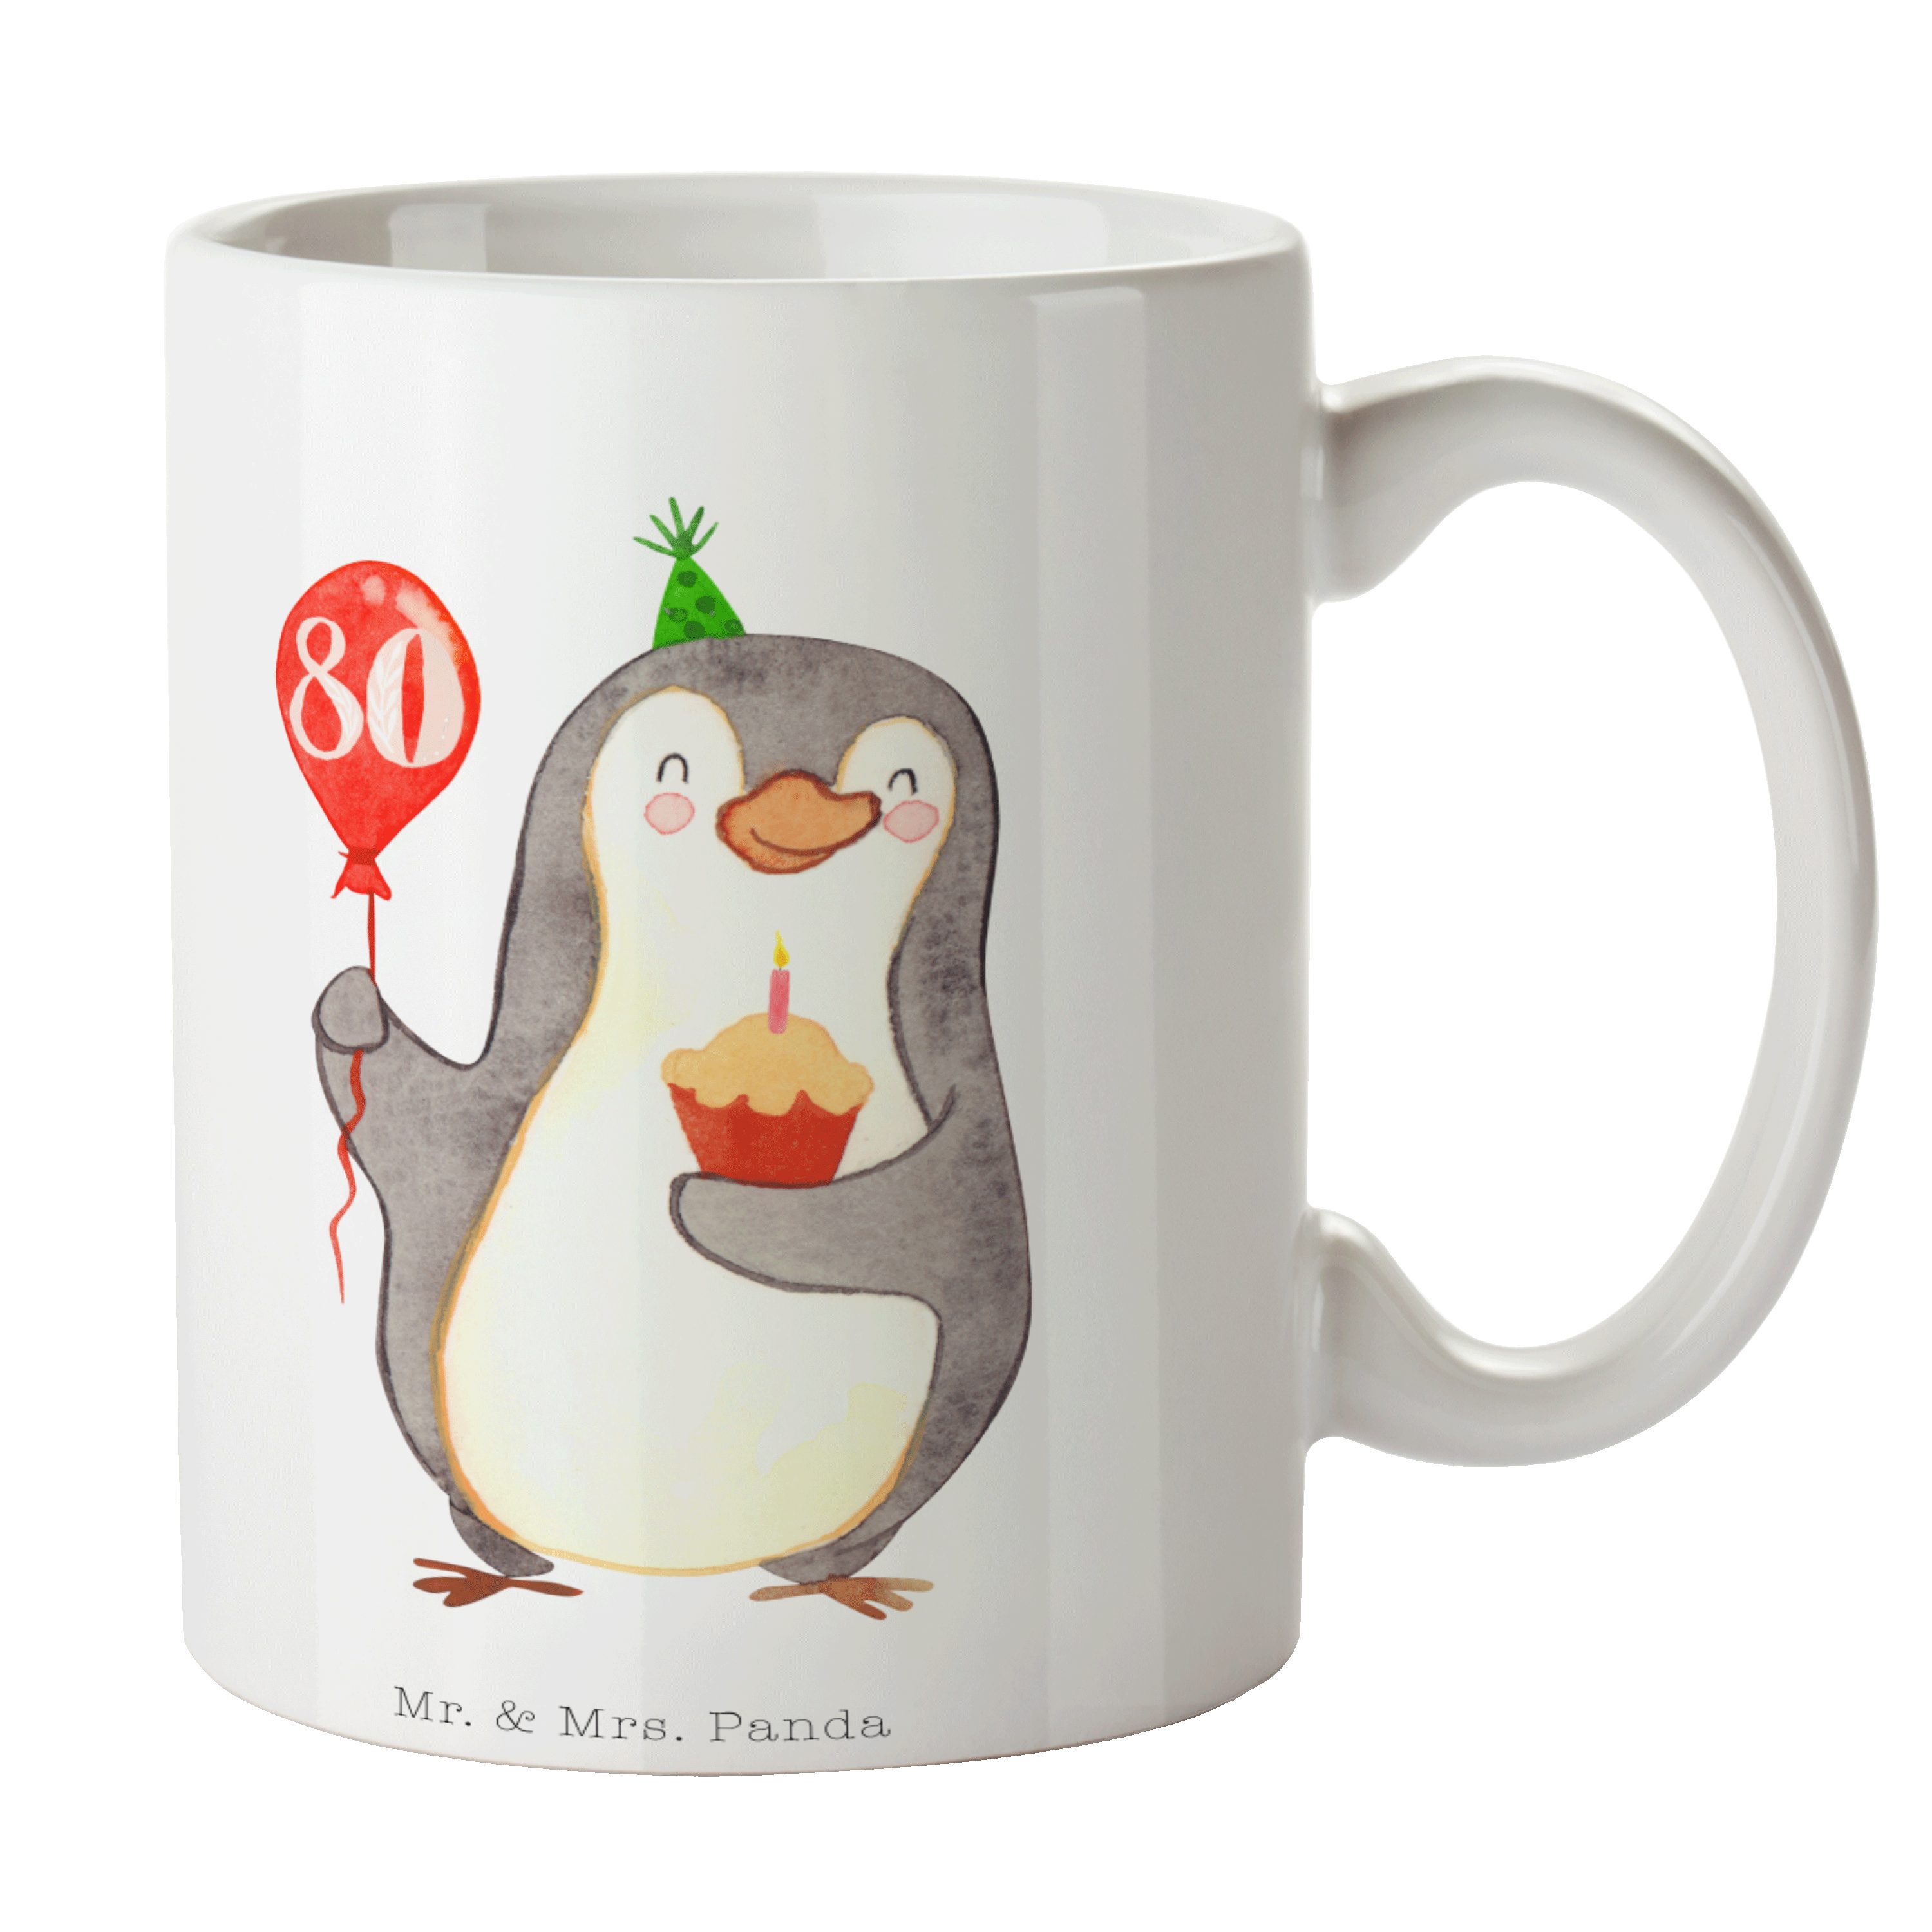 Mr. & Mrs. Panda Tasse 80. Geburtstag Pinguin Luftballon - Weiß - Geschenk, Teetasse, Geburt, Keramik